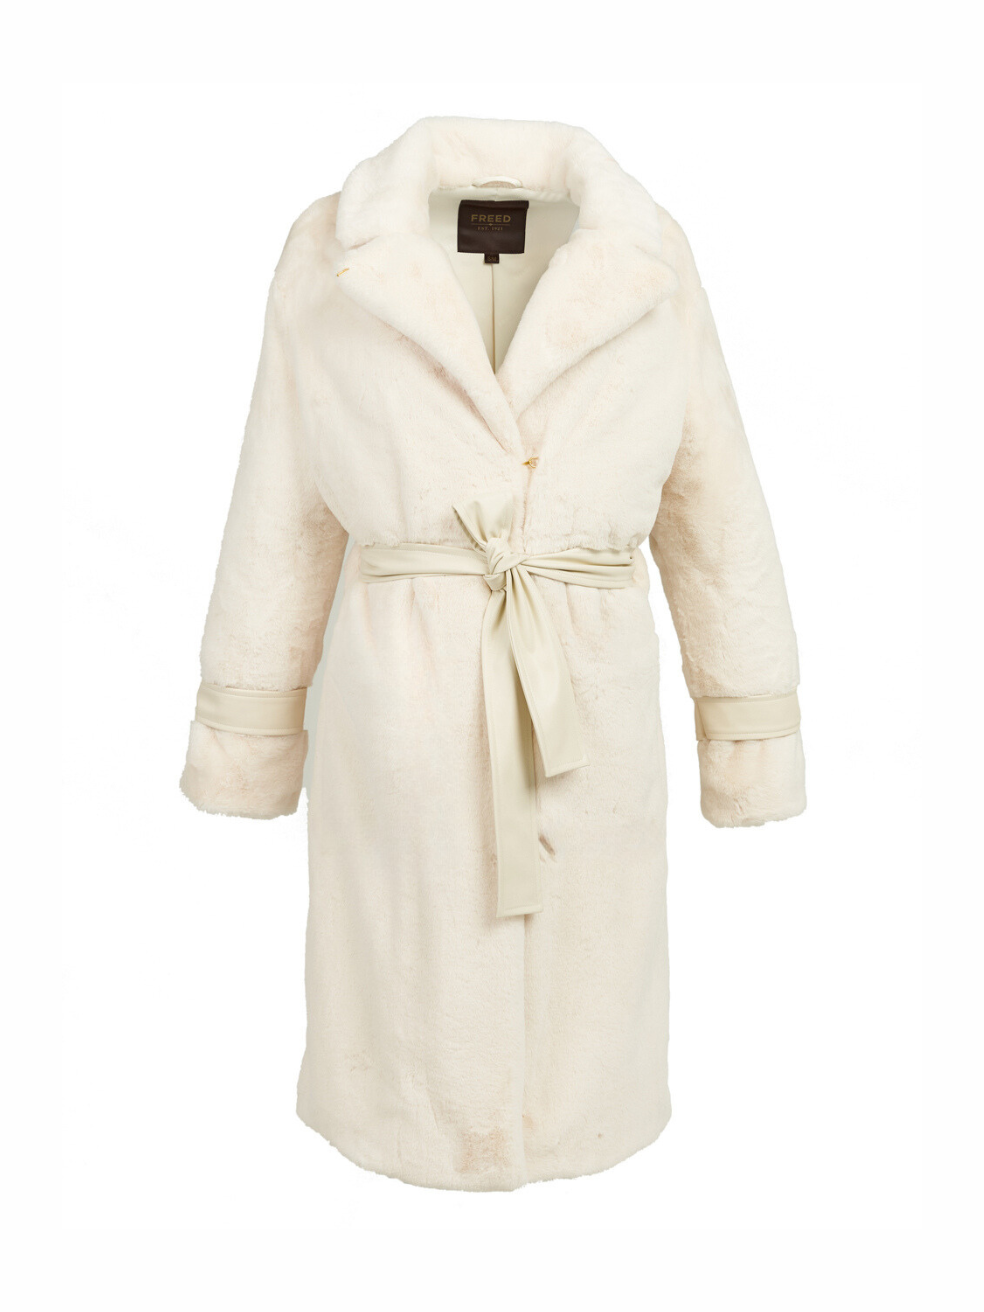 Violet White Cream Living Wage Responsible Fashion Cold Weather Coats Vegan Fur